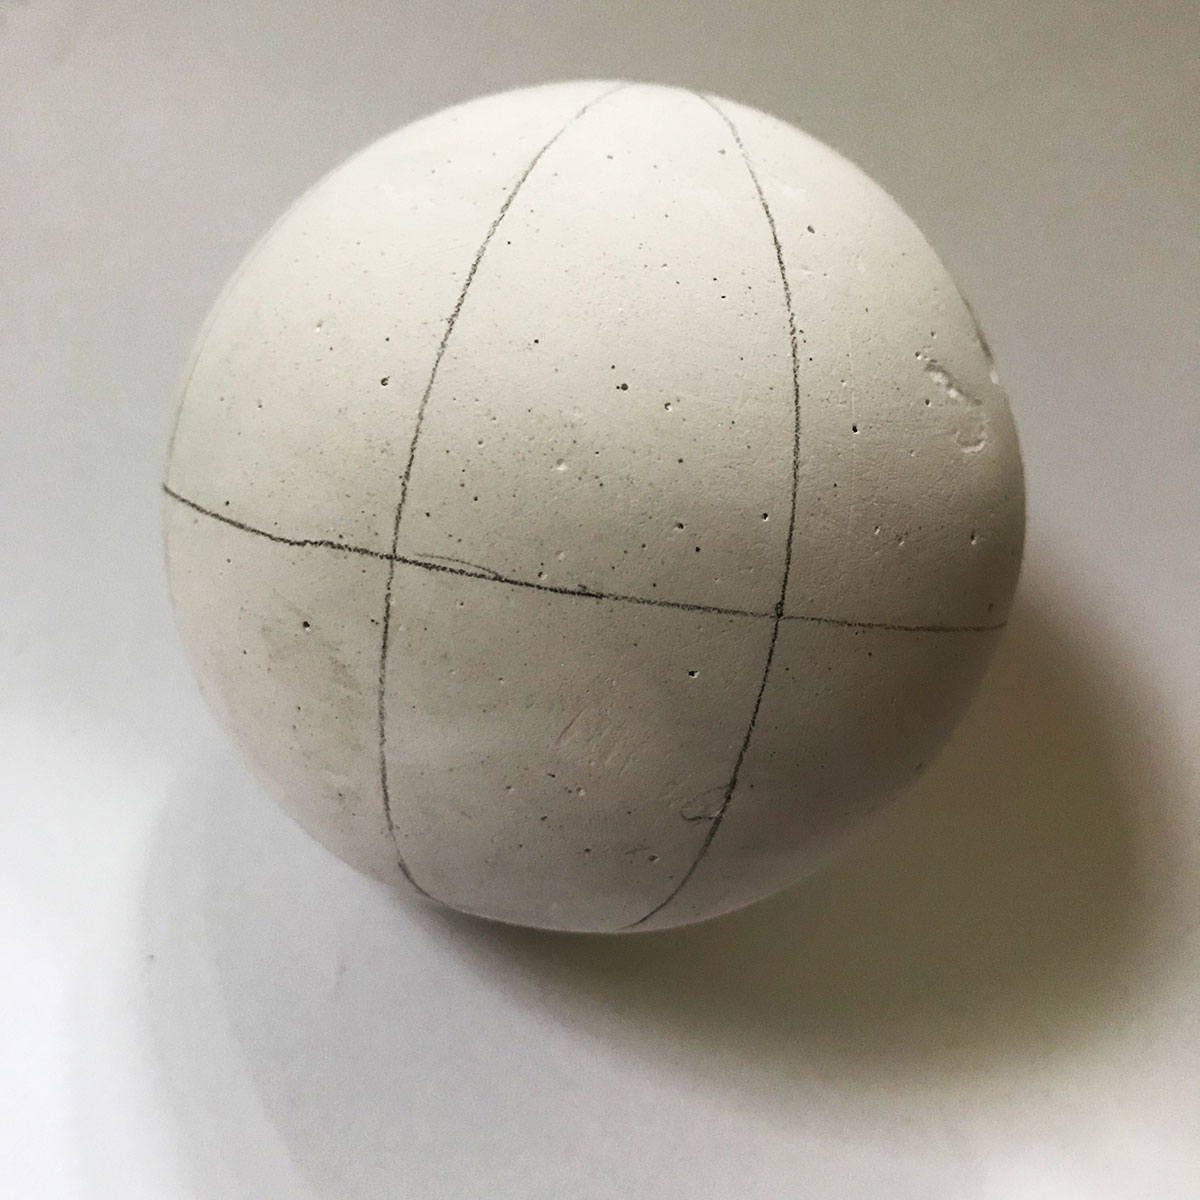 15 Concrete Sphere Mold